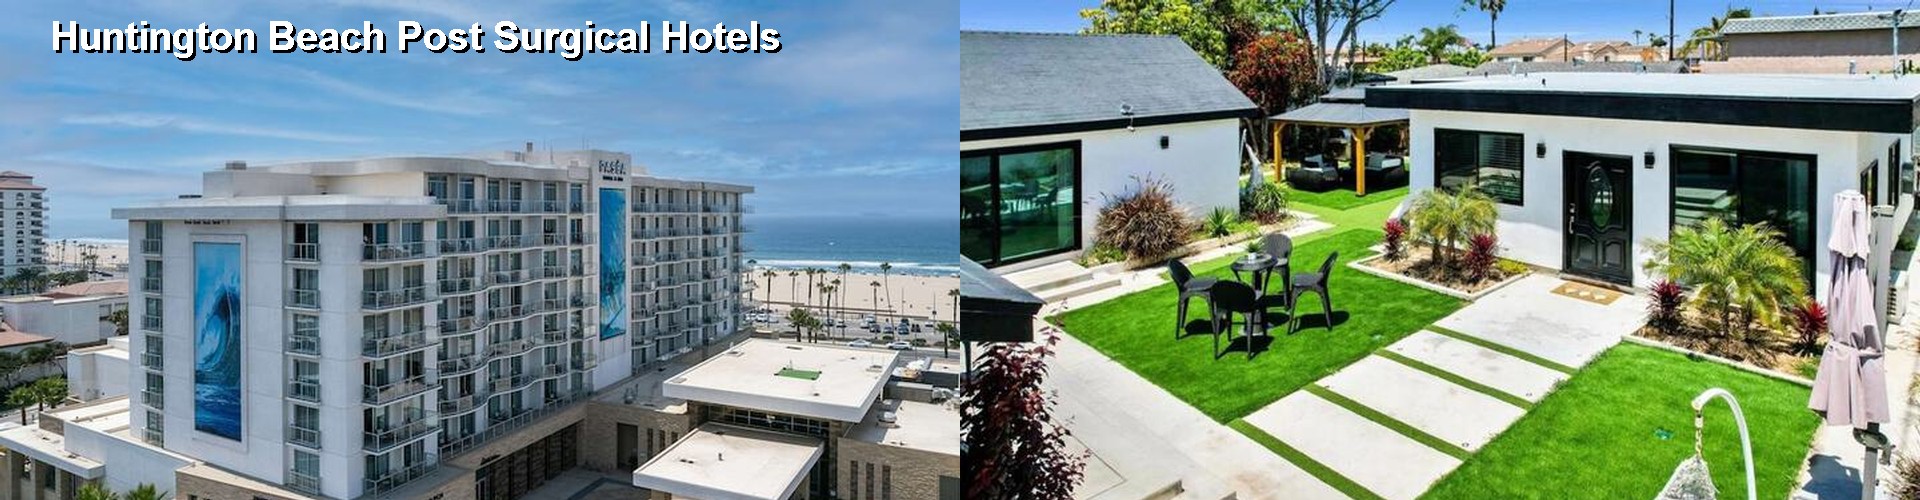 4 Best Hotels near Huntington Beach Post Surgical